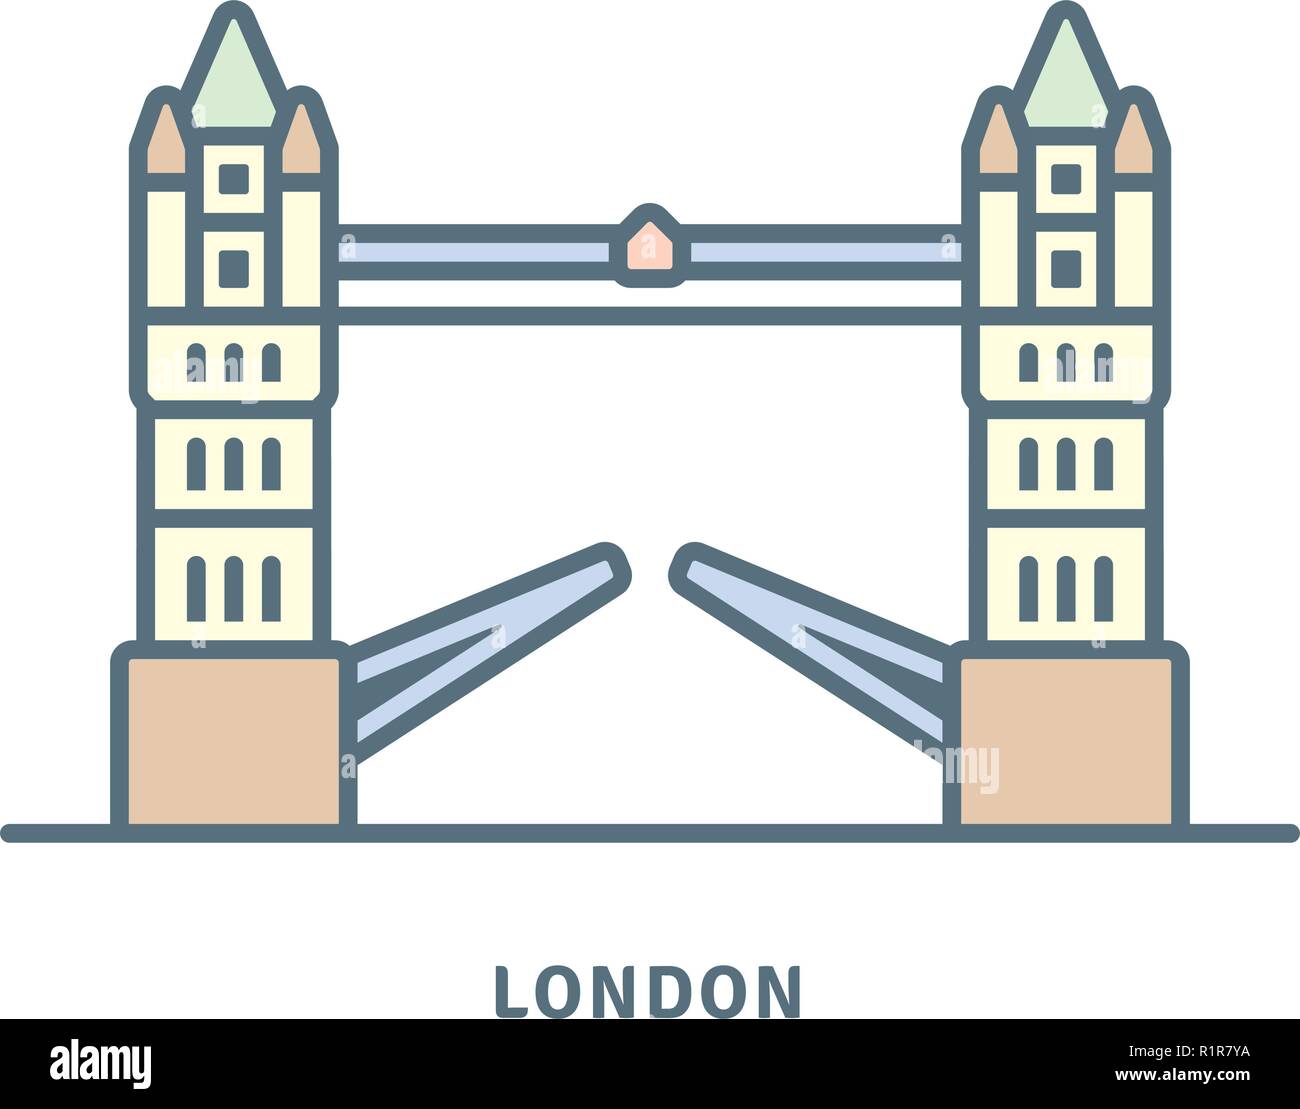 London line icon. Tower Bridge vector illustration. Stock Vector